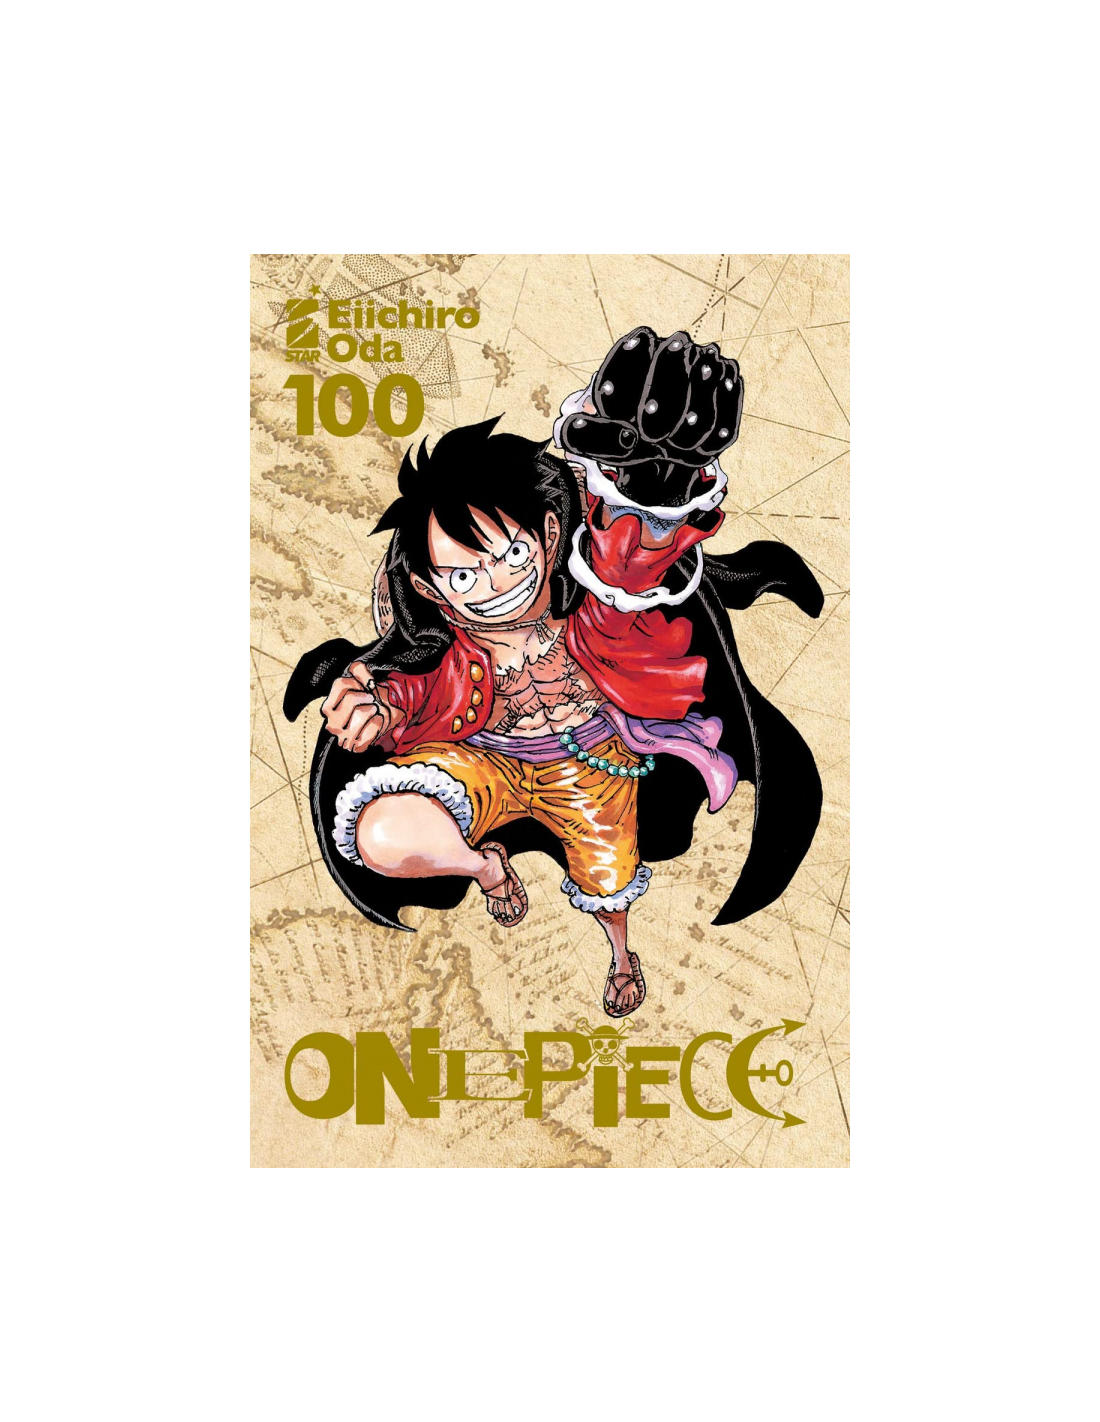 One Piece 100 (Celebration Edition)